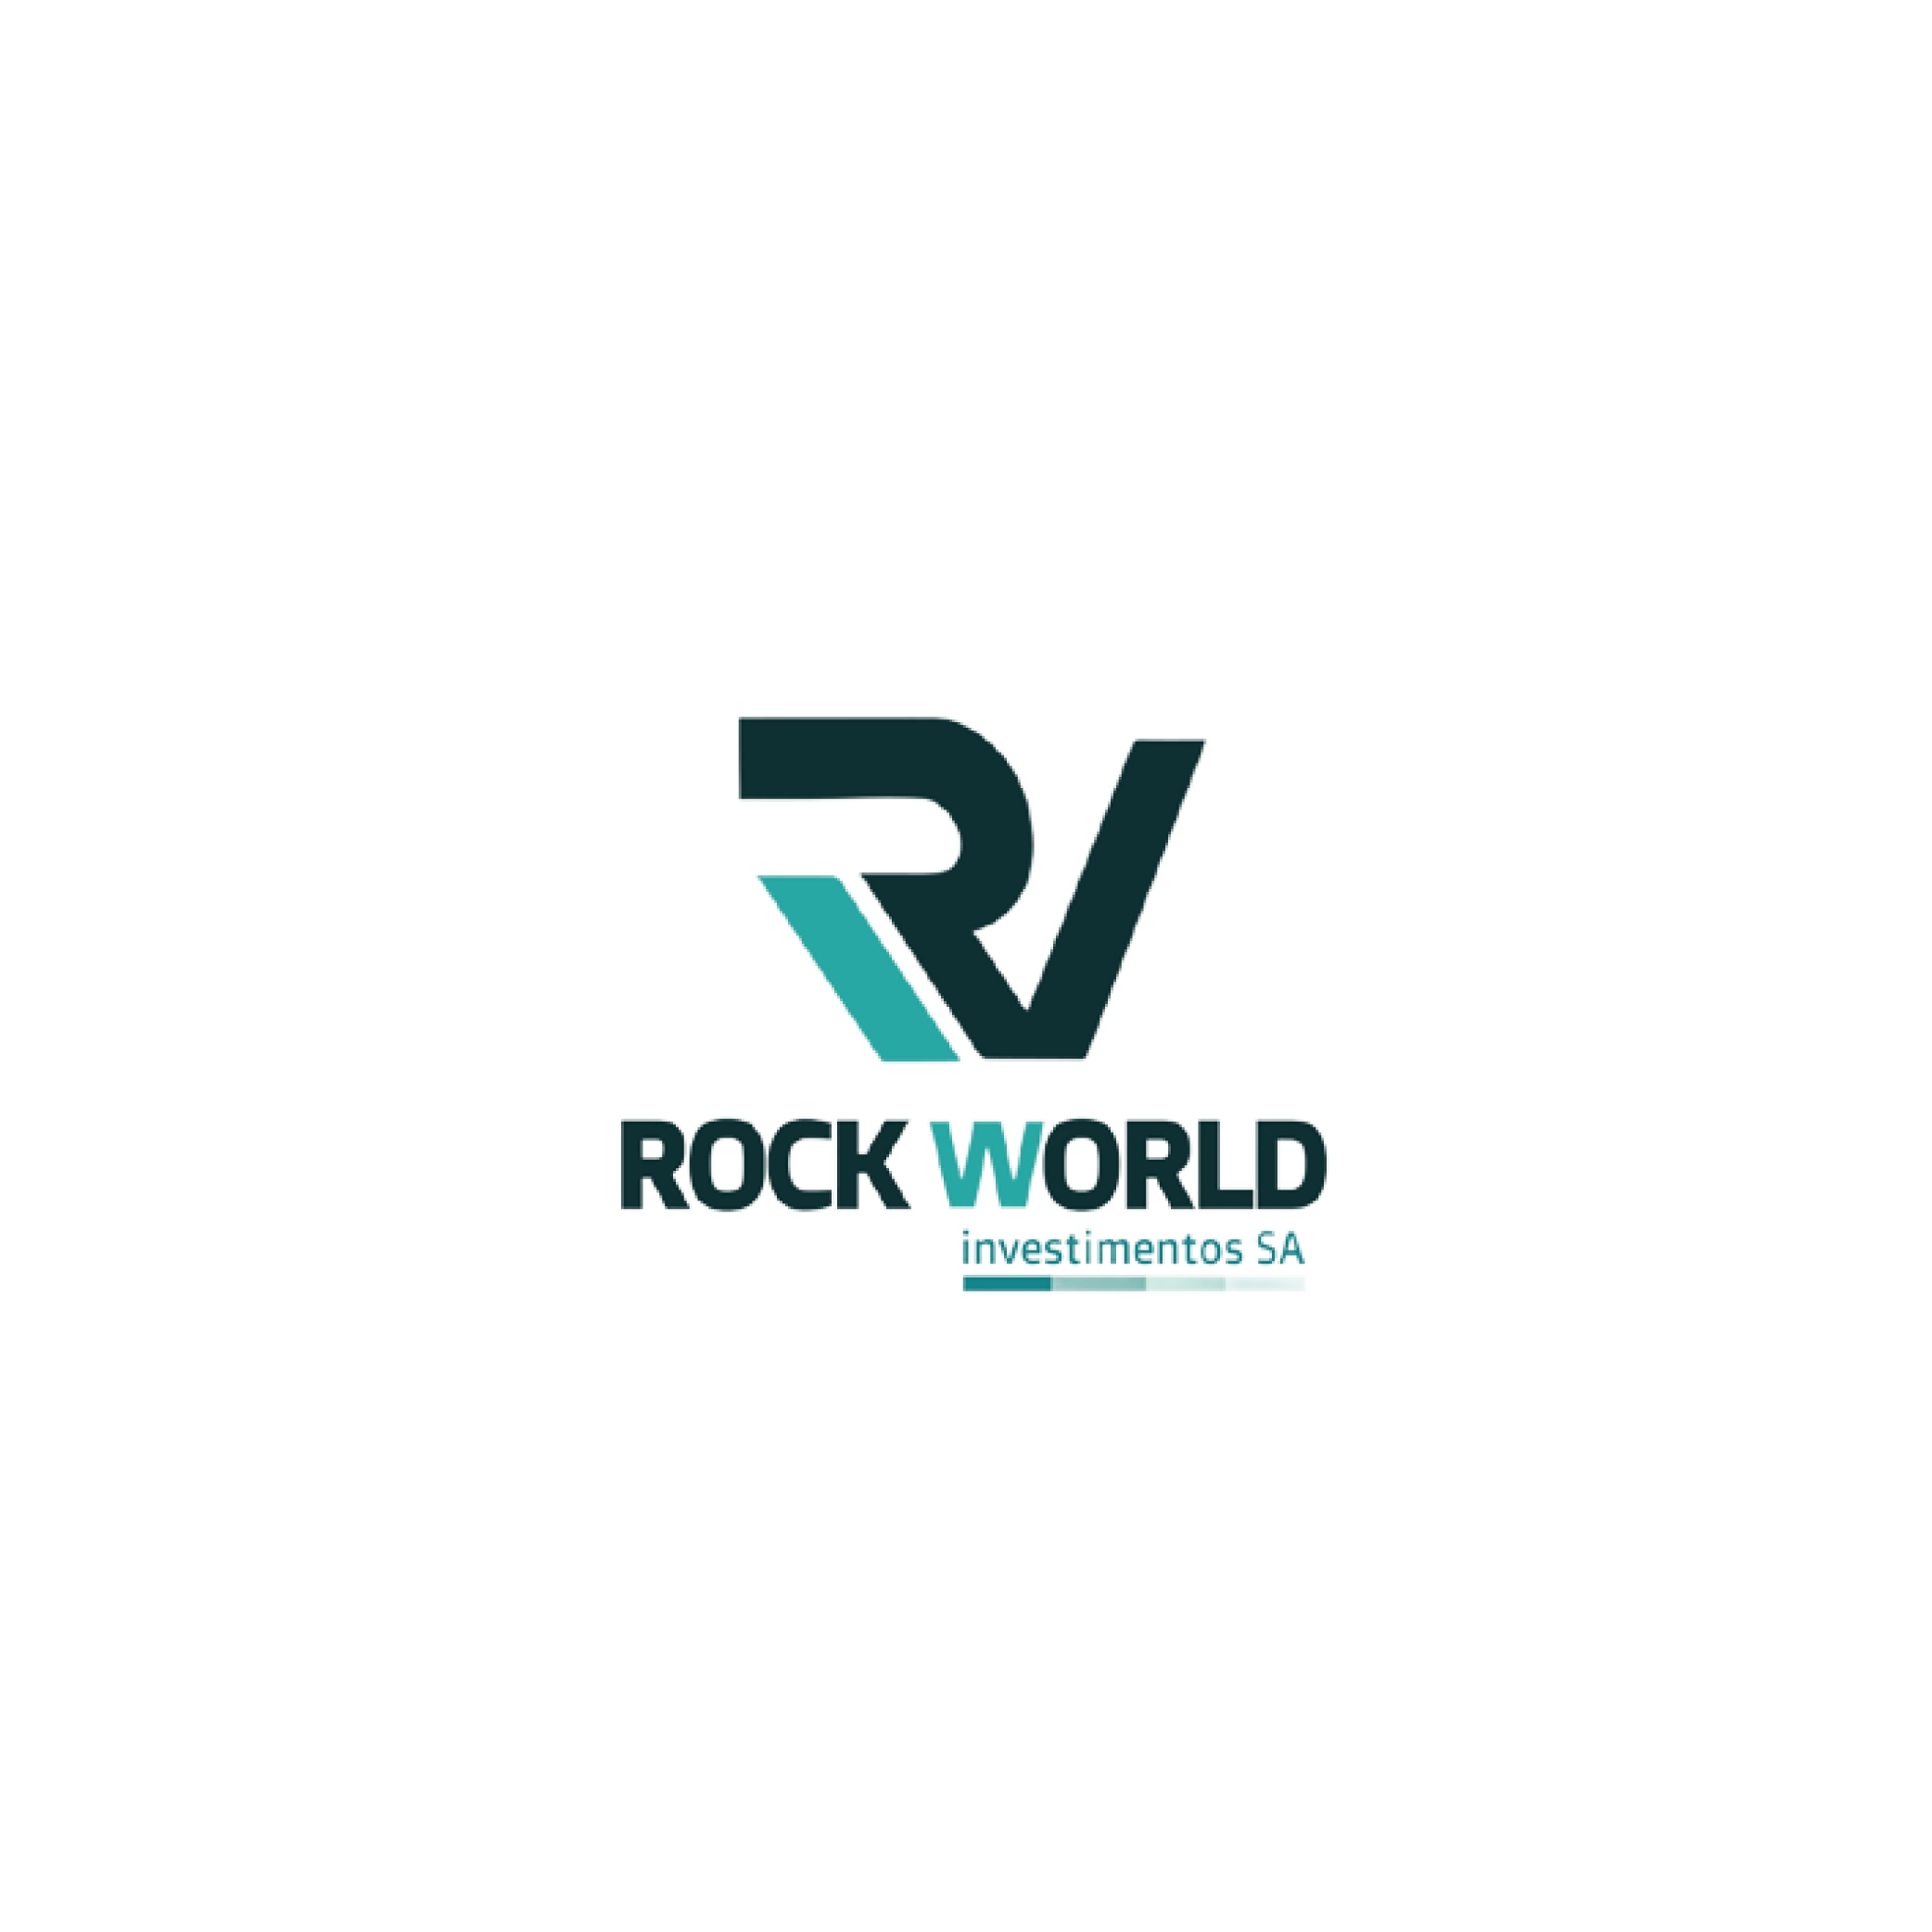 Rockworld Investimentos